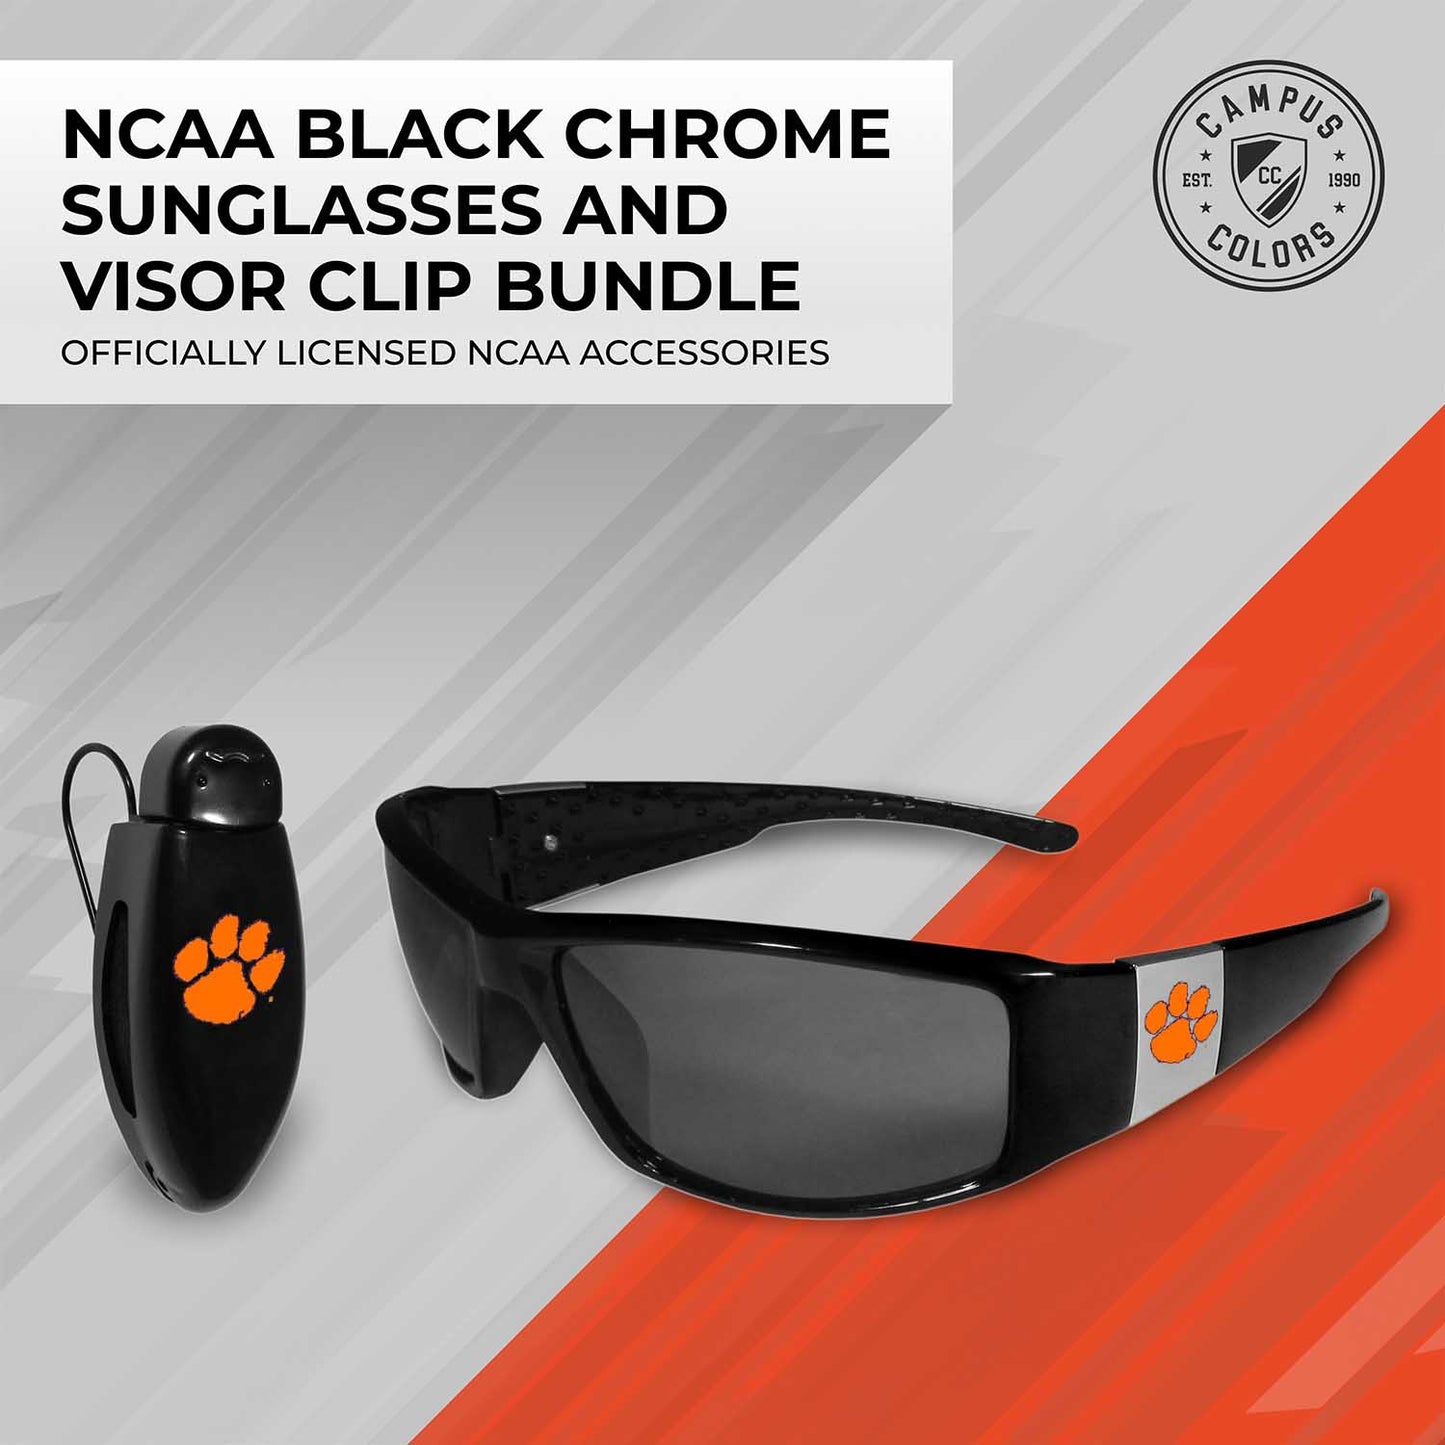 Clemson Tigers NCAA Black Chrome Sunglasses with Visor Clip Bundle - Black